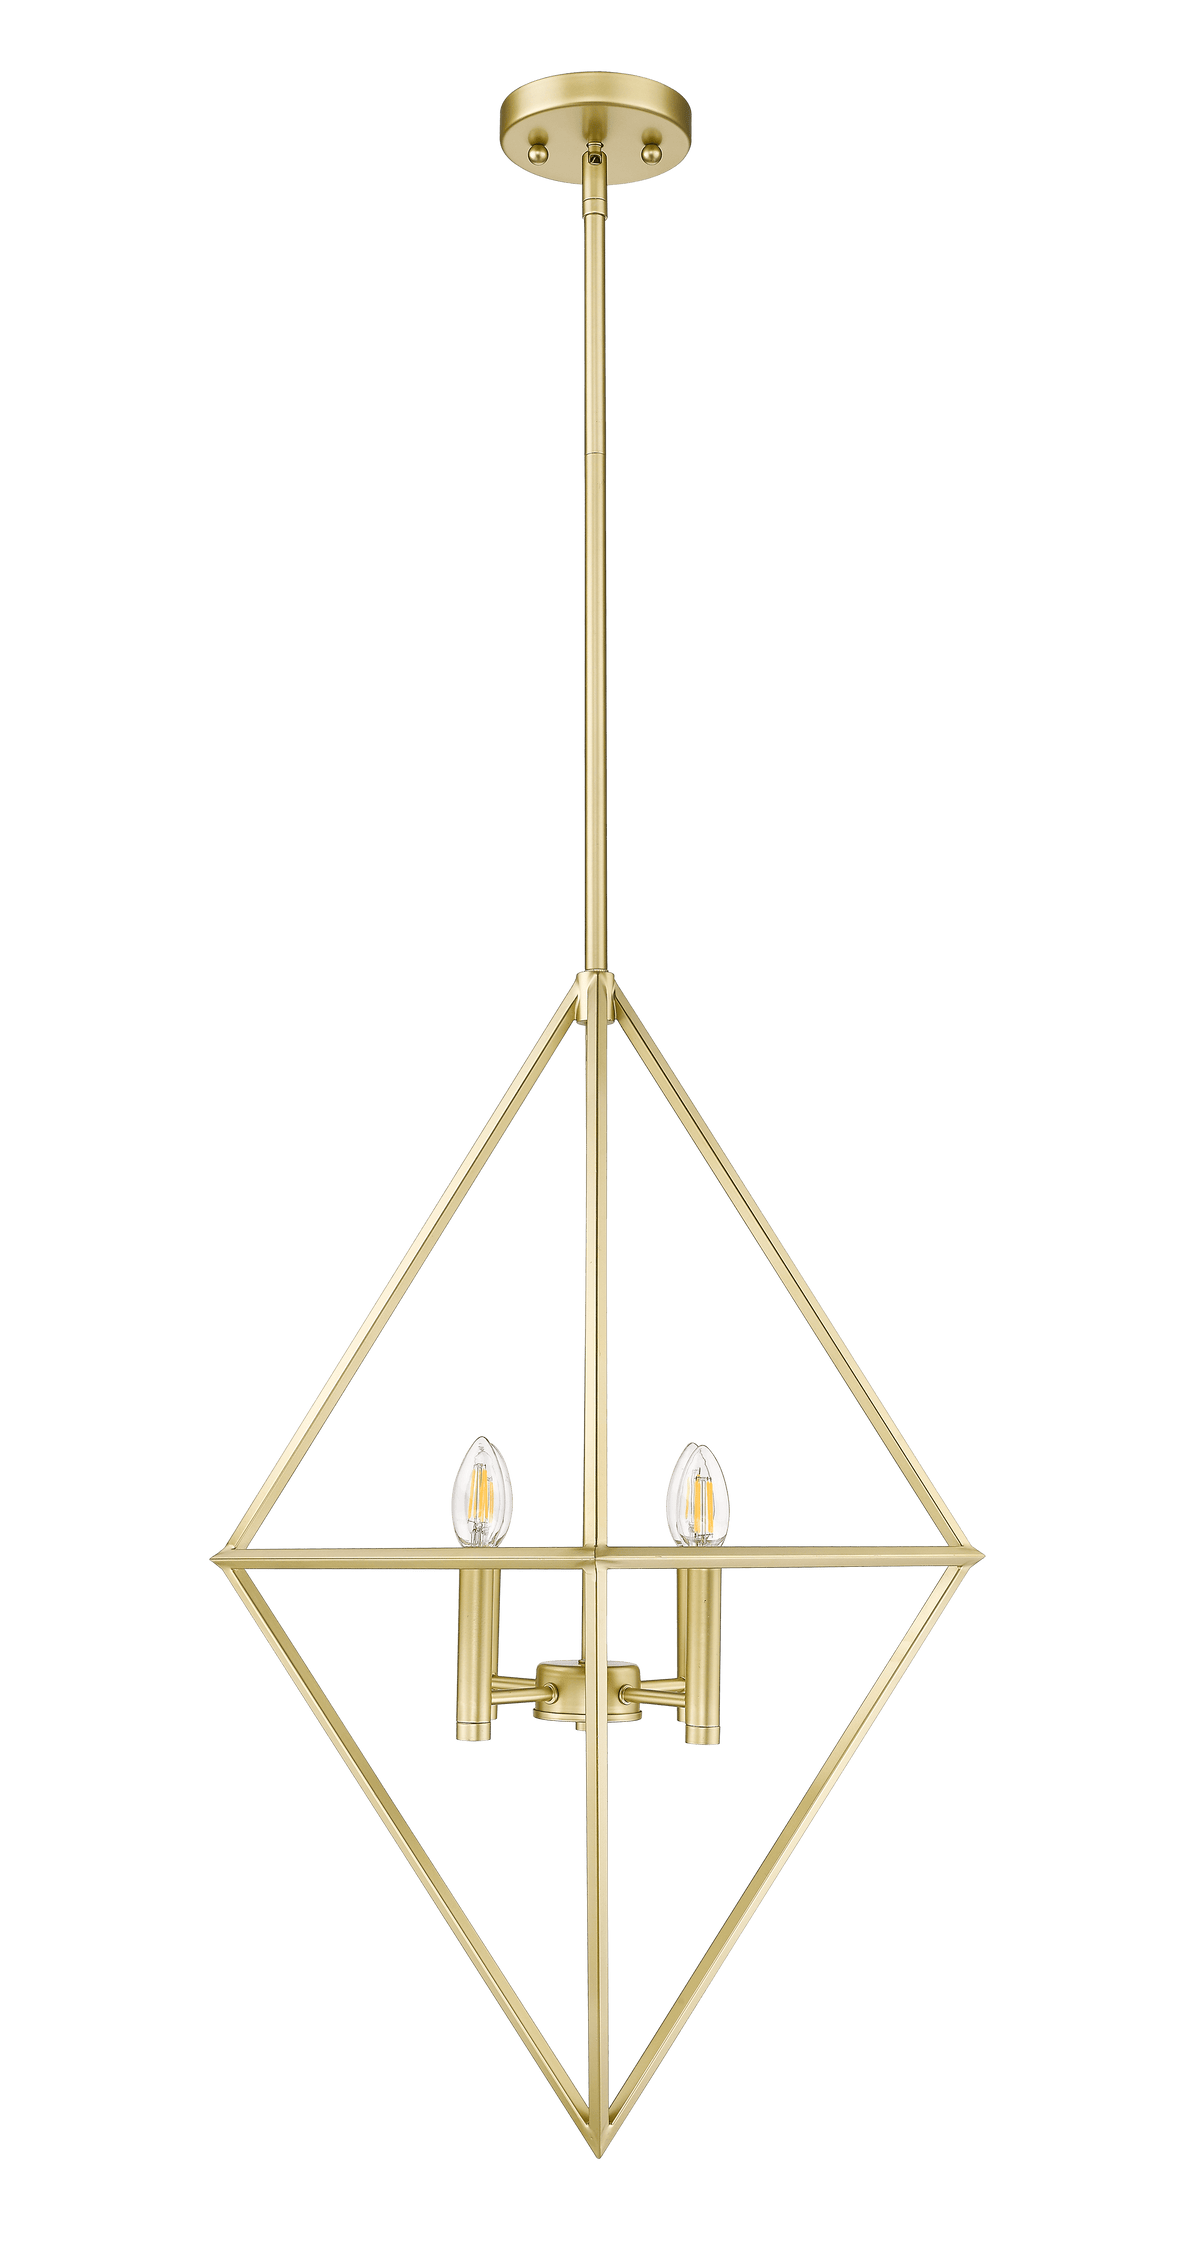 Gold modern geometric cage pendant light with 4 lights - Vivio Lighting